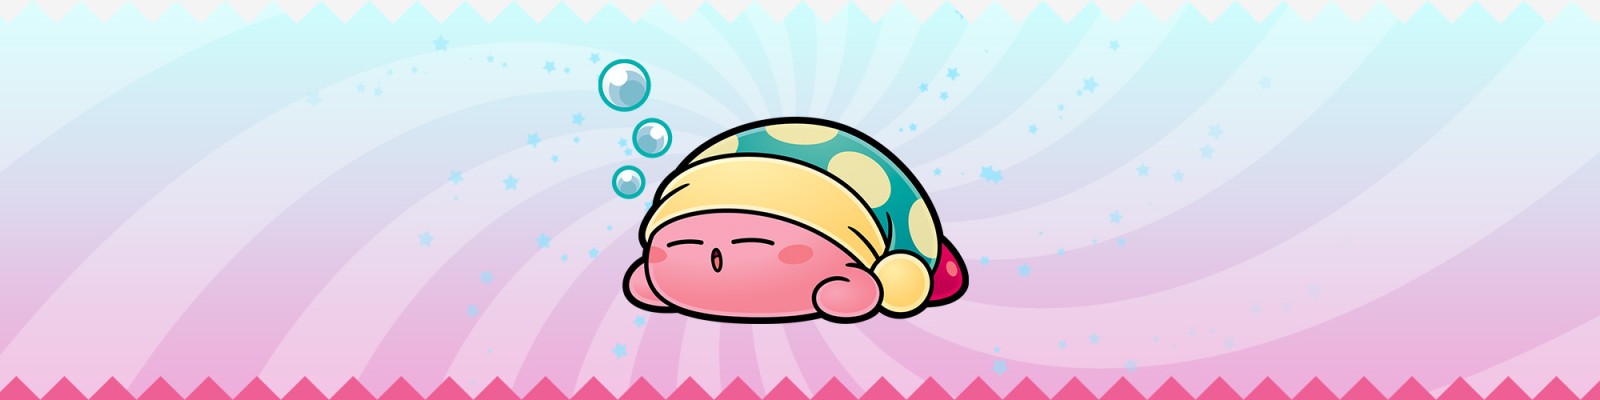 Kirby 25th Anniversary Copy Ability Global Poll | Nintendo